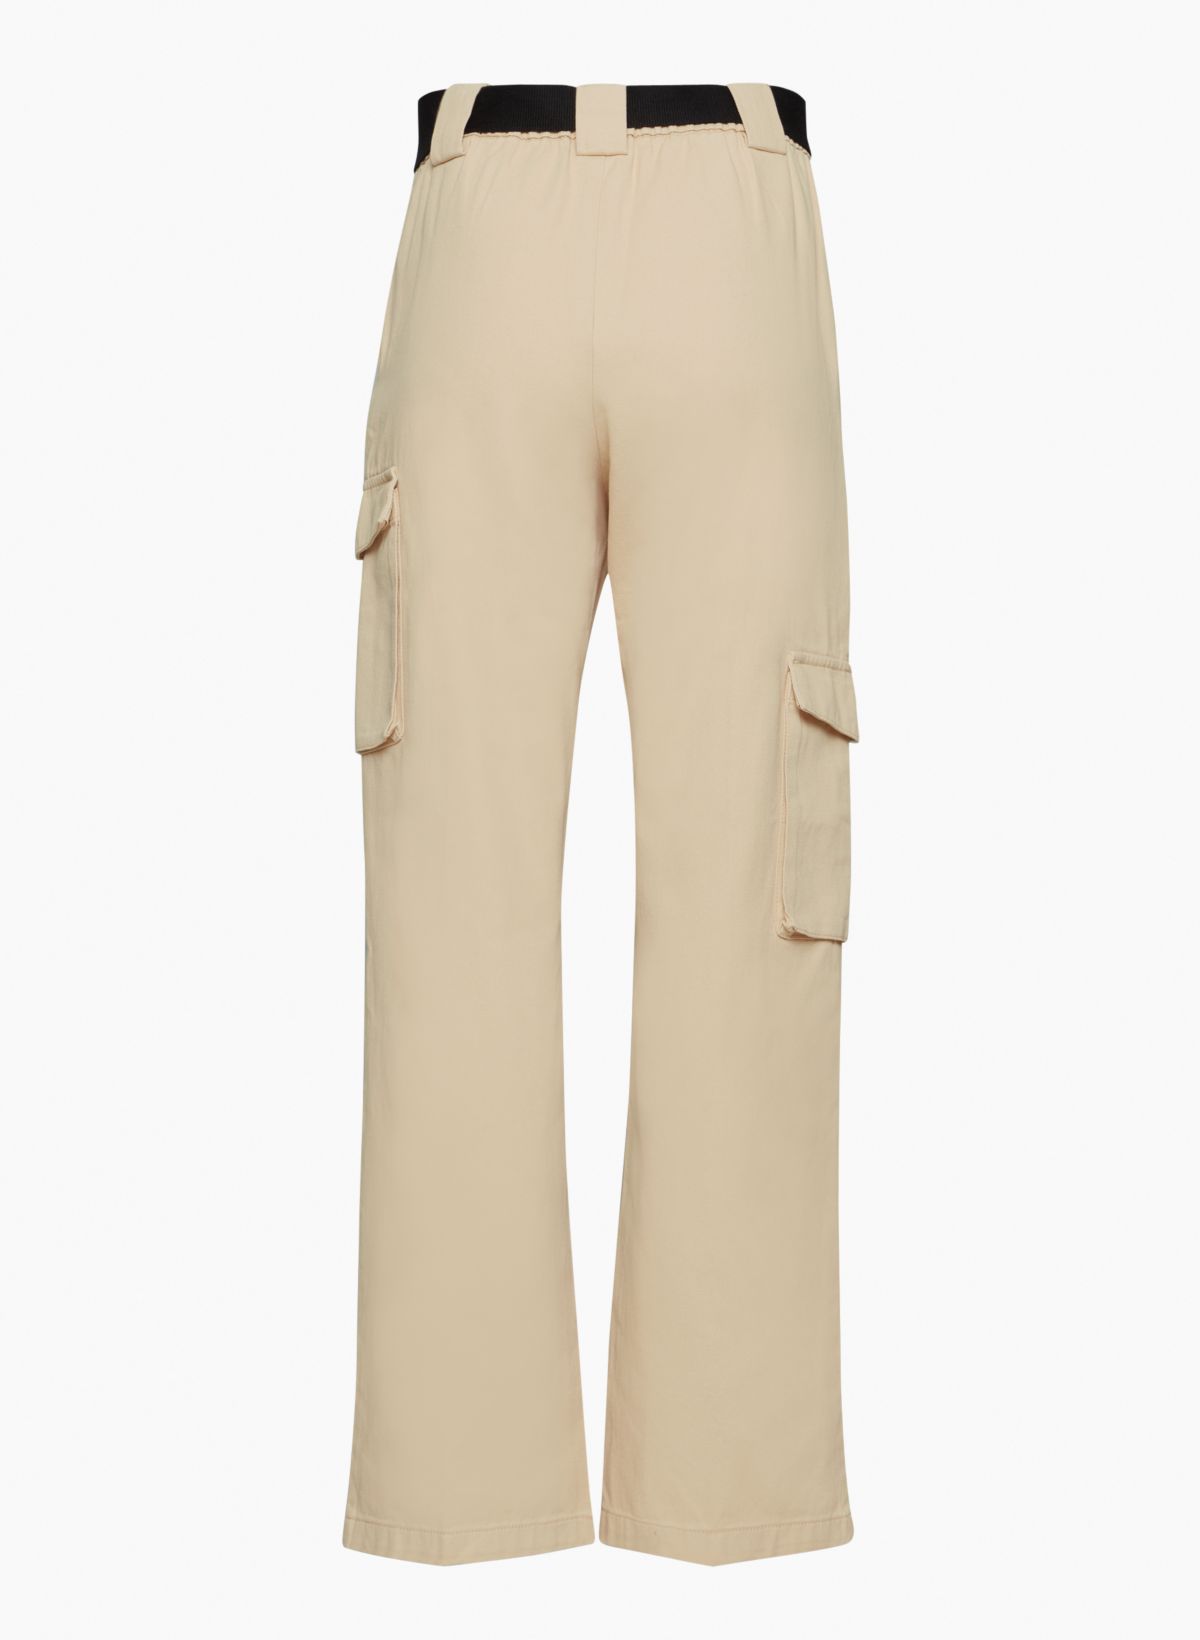 Women's Loose Cargo Pants Autumn Fashion Trousers Large-size Leggings XS-XL